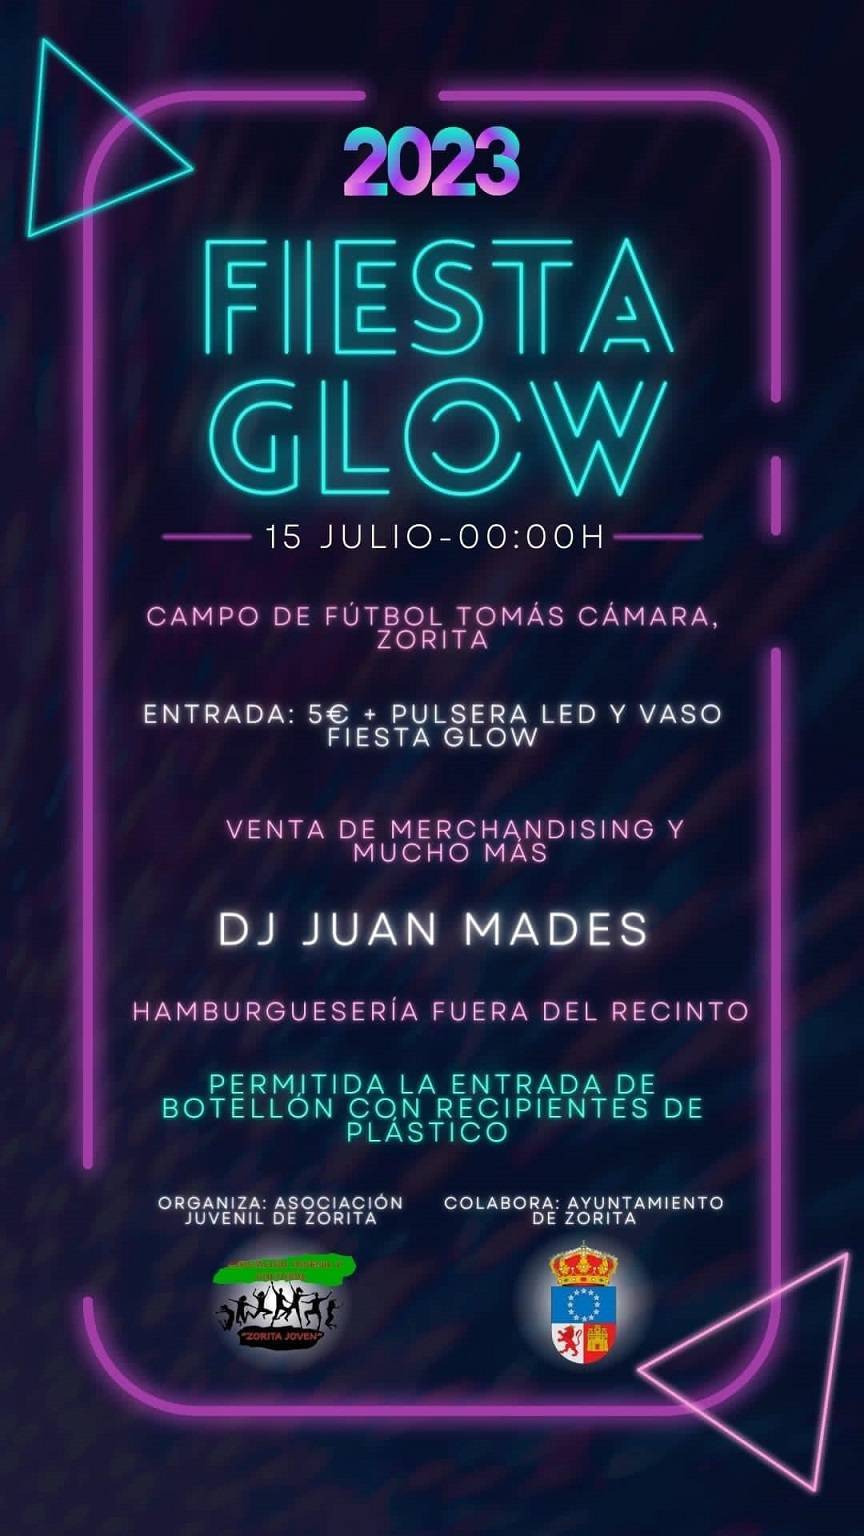 Fiesta glow (2023) - Zorita (Cáceres)